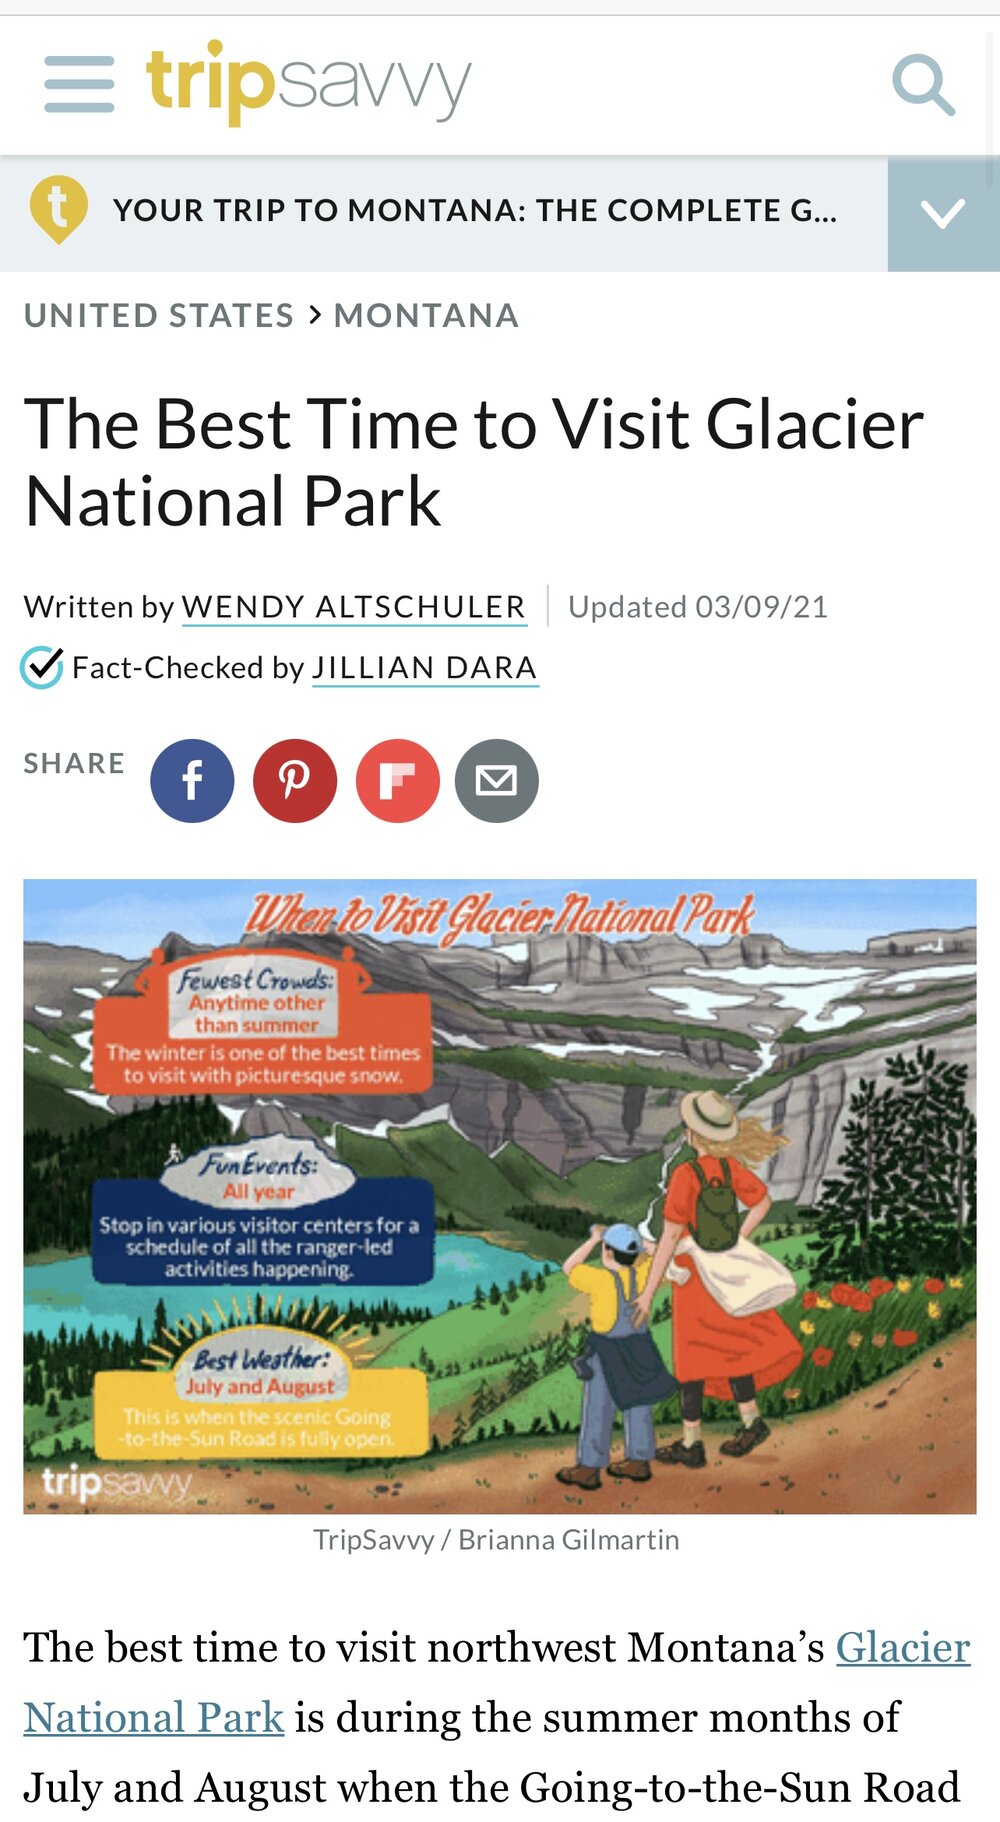 The Best Time to Visit Glacier National Park